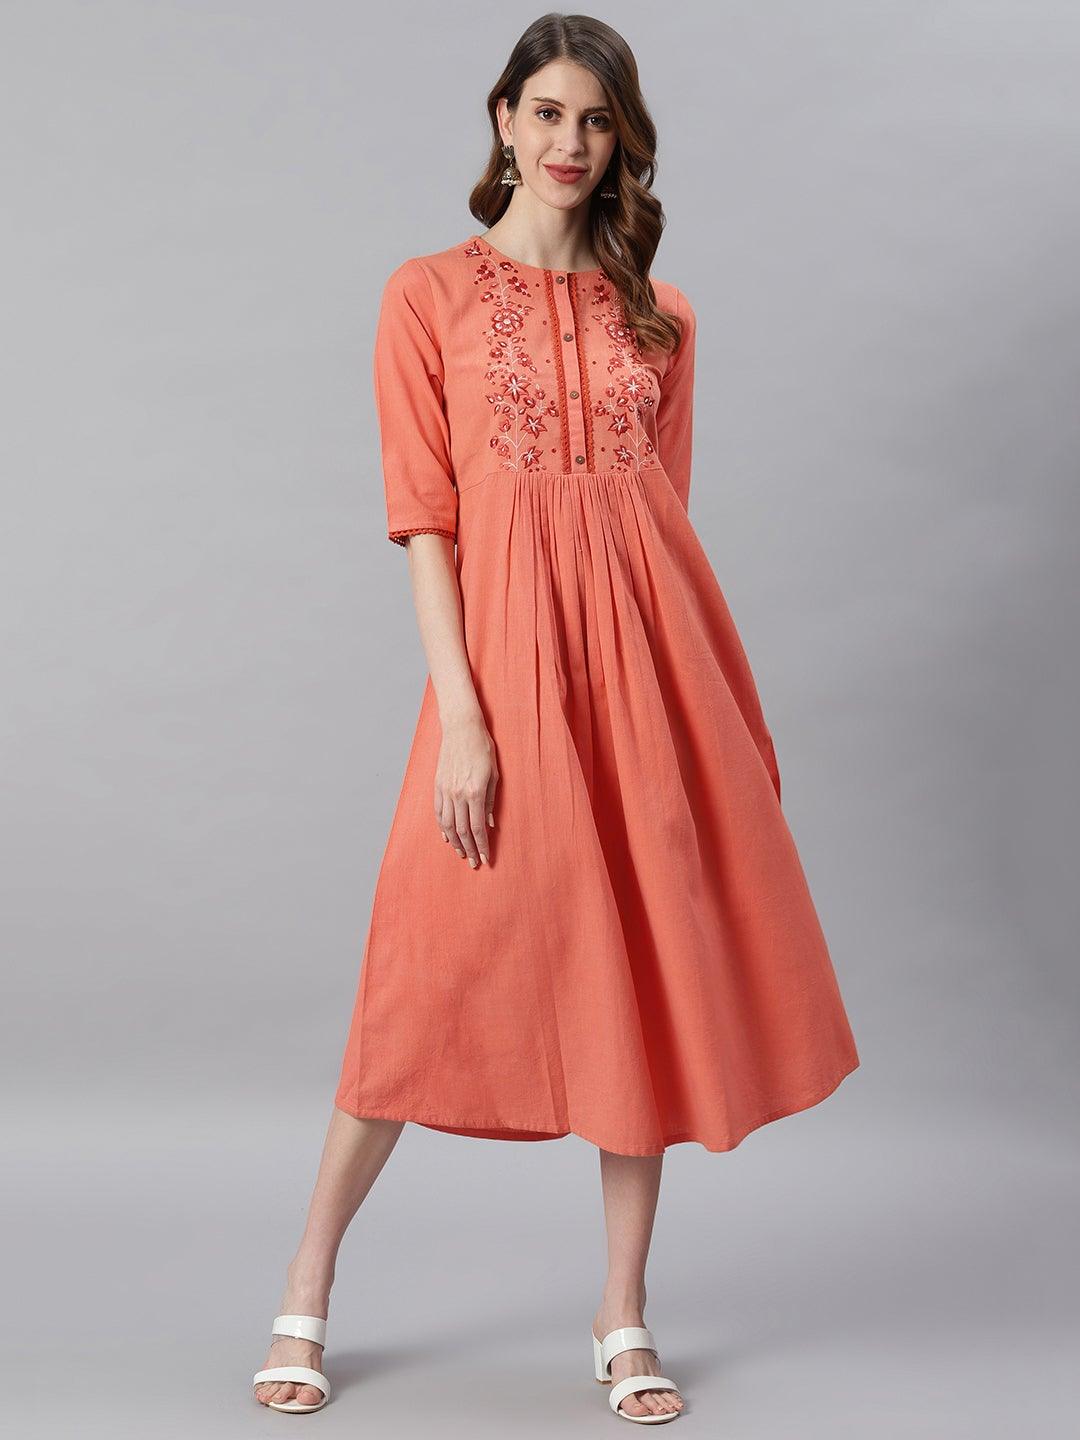 Orange Cotton Flex Embroidery Flared Western Dress Janasya Gold-Discontinue